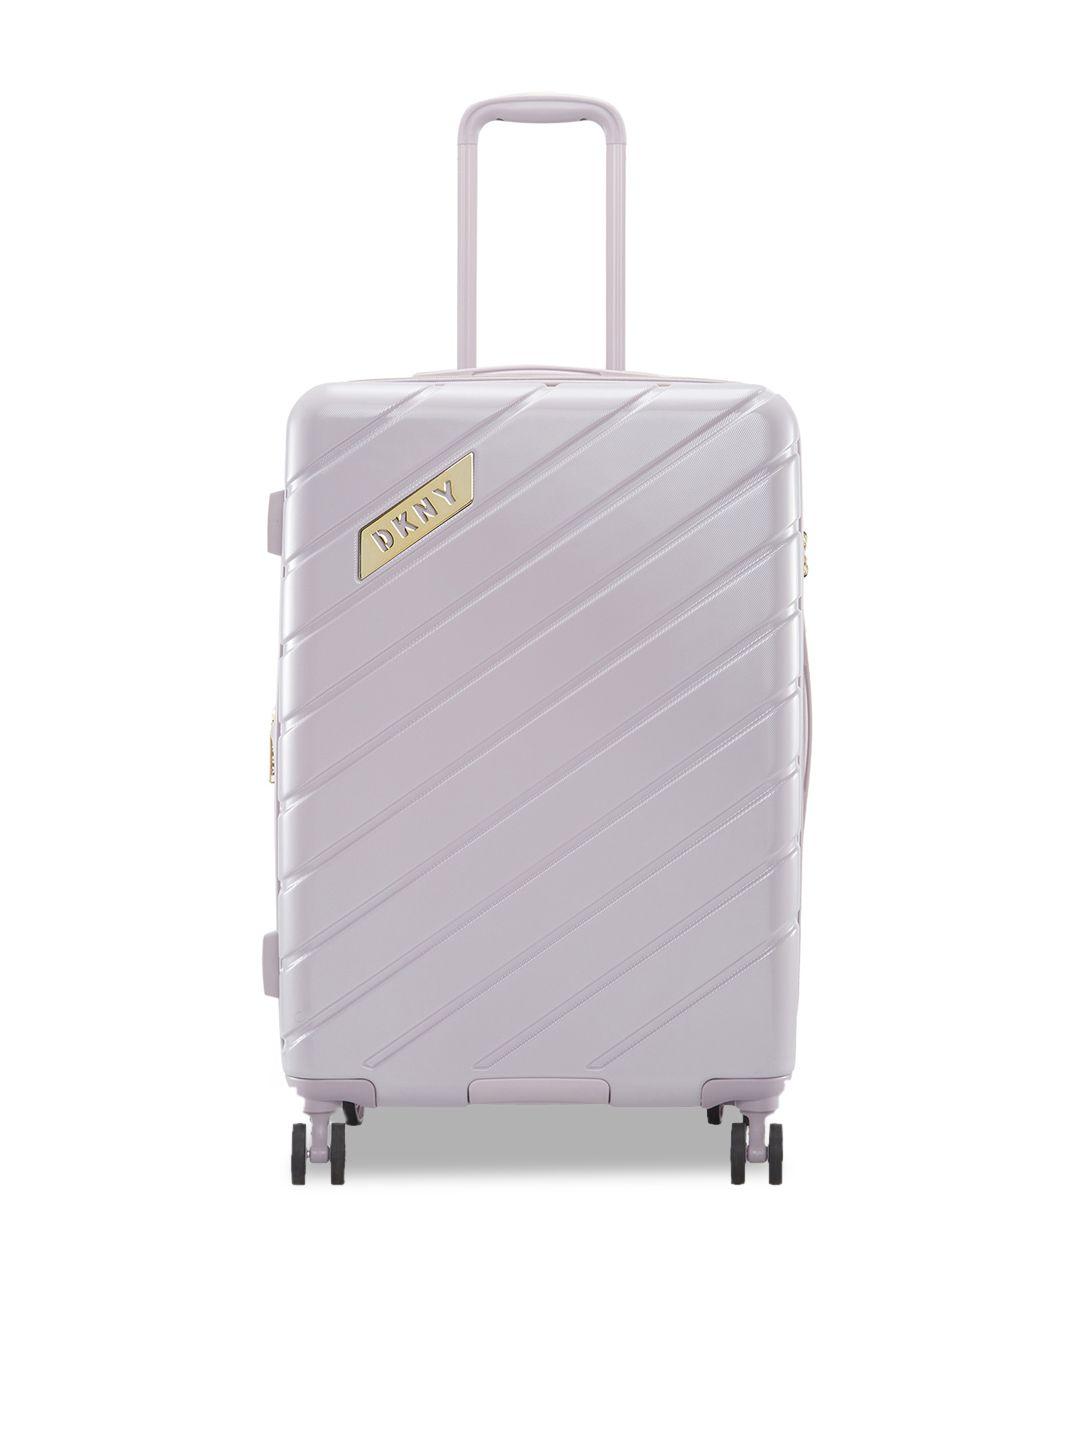 dkny bias textured hard-sided medium abs trolley suitcase